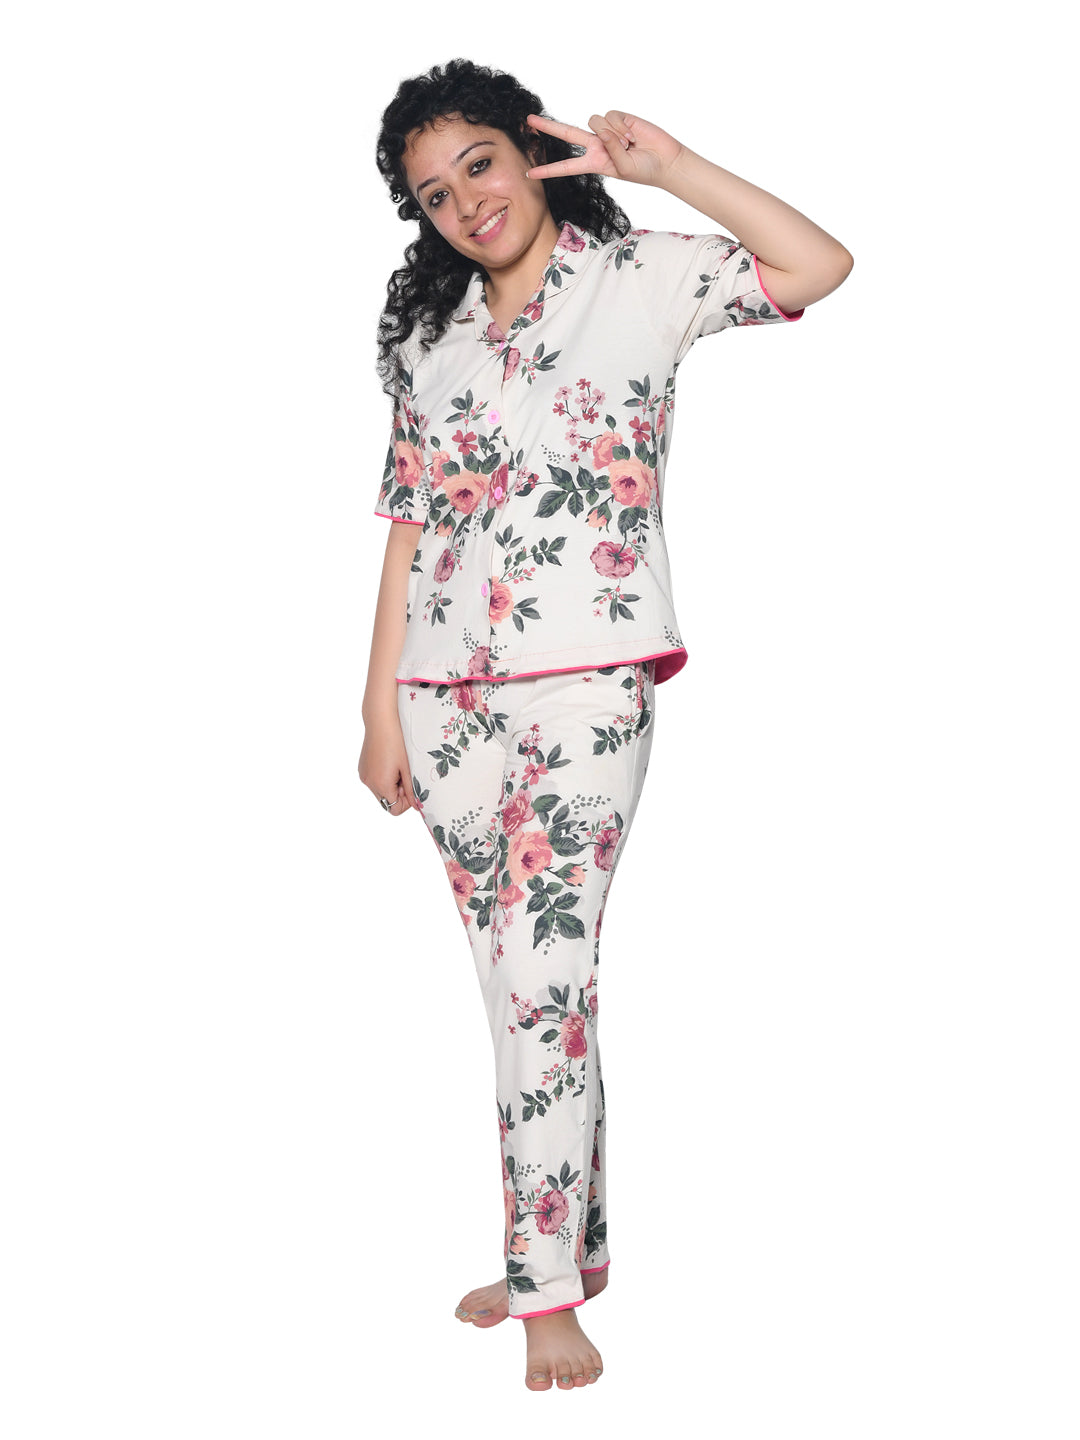 Mauve Floral Printed Nightsuit Set for Women - koochi Poochi